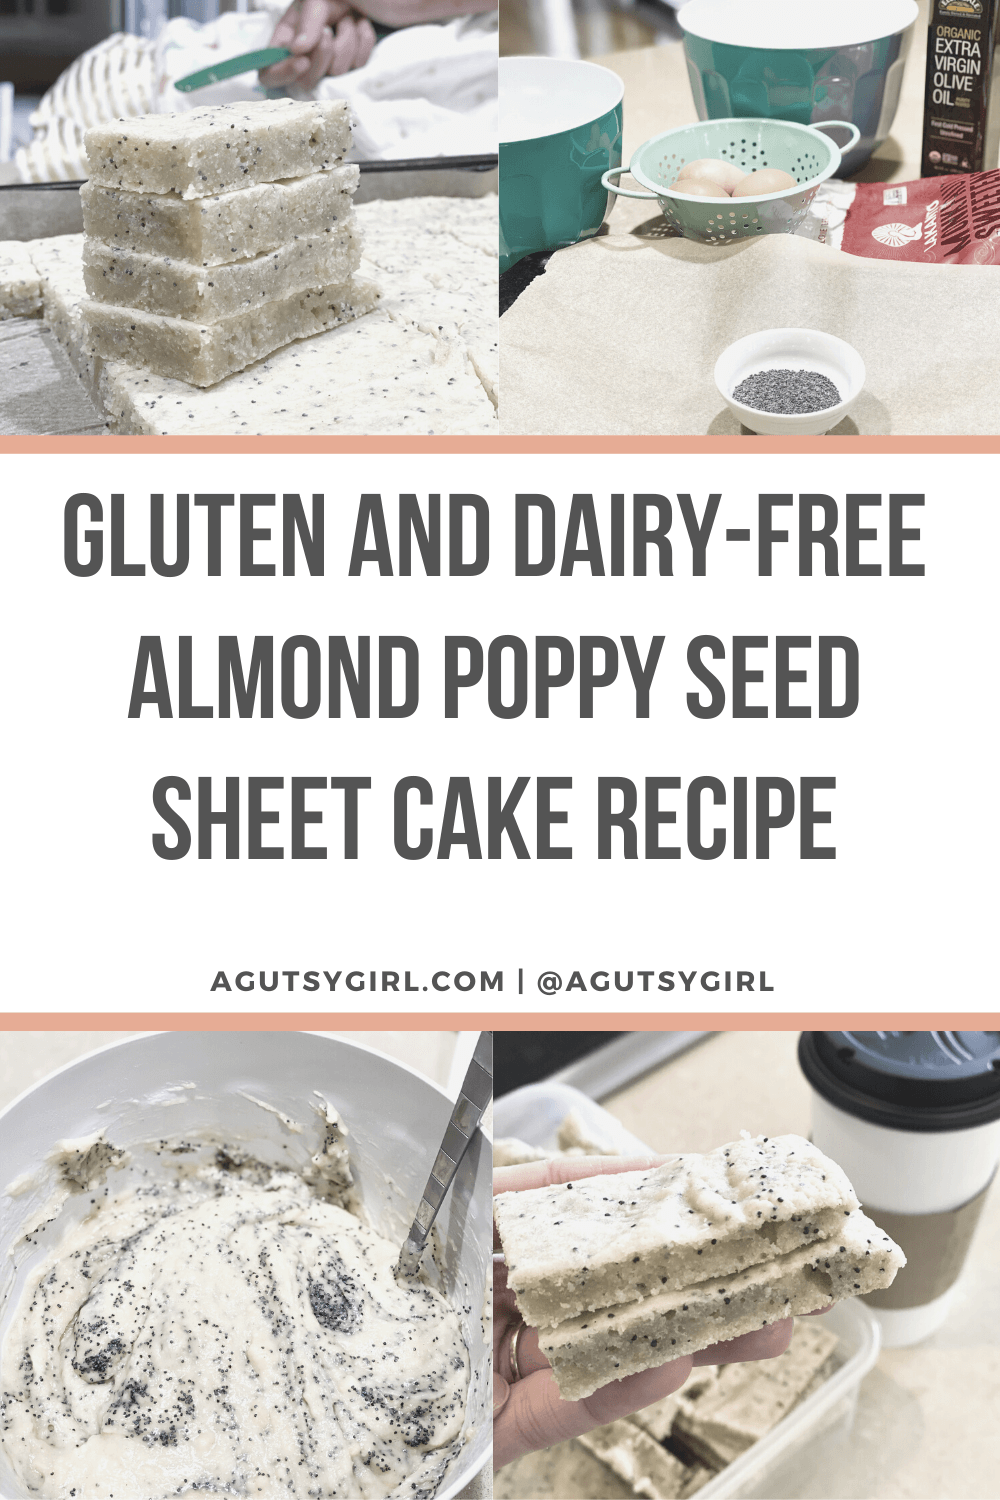 Gluten and Dairy-Free Almond Poppy Seed Sheet Cake Recipe agutsygirl.com #glutenfreerecipe #dairyfreerecipe #glutenfreedairyfree #poppyseed